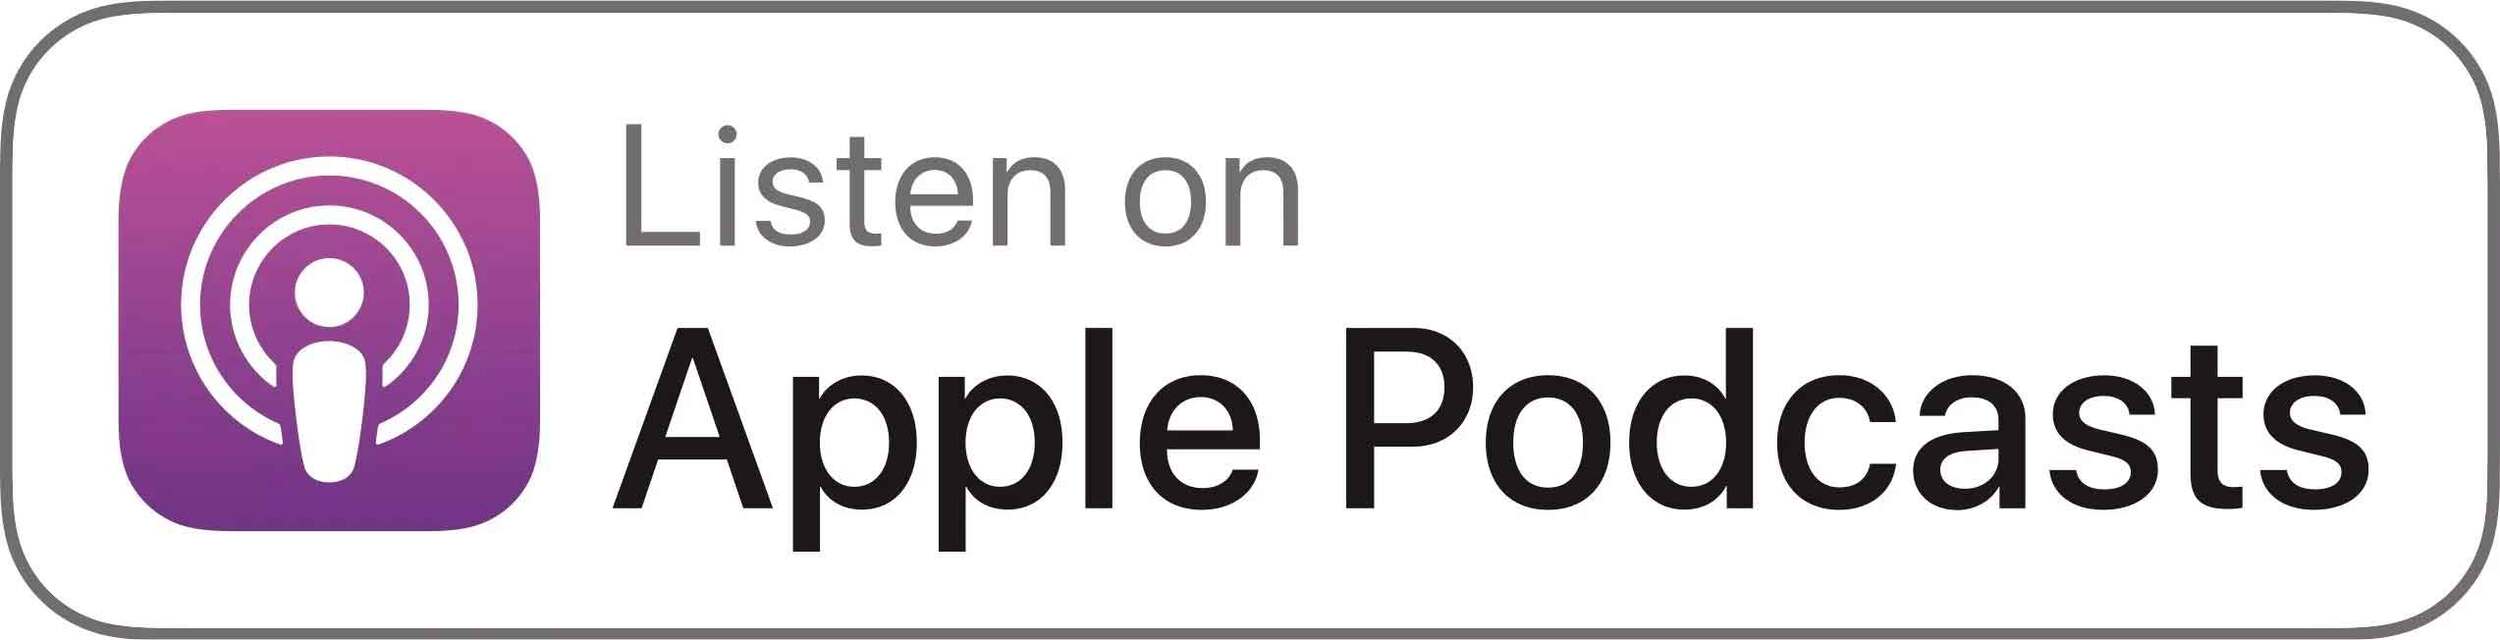 apple podcast logo 2500x640